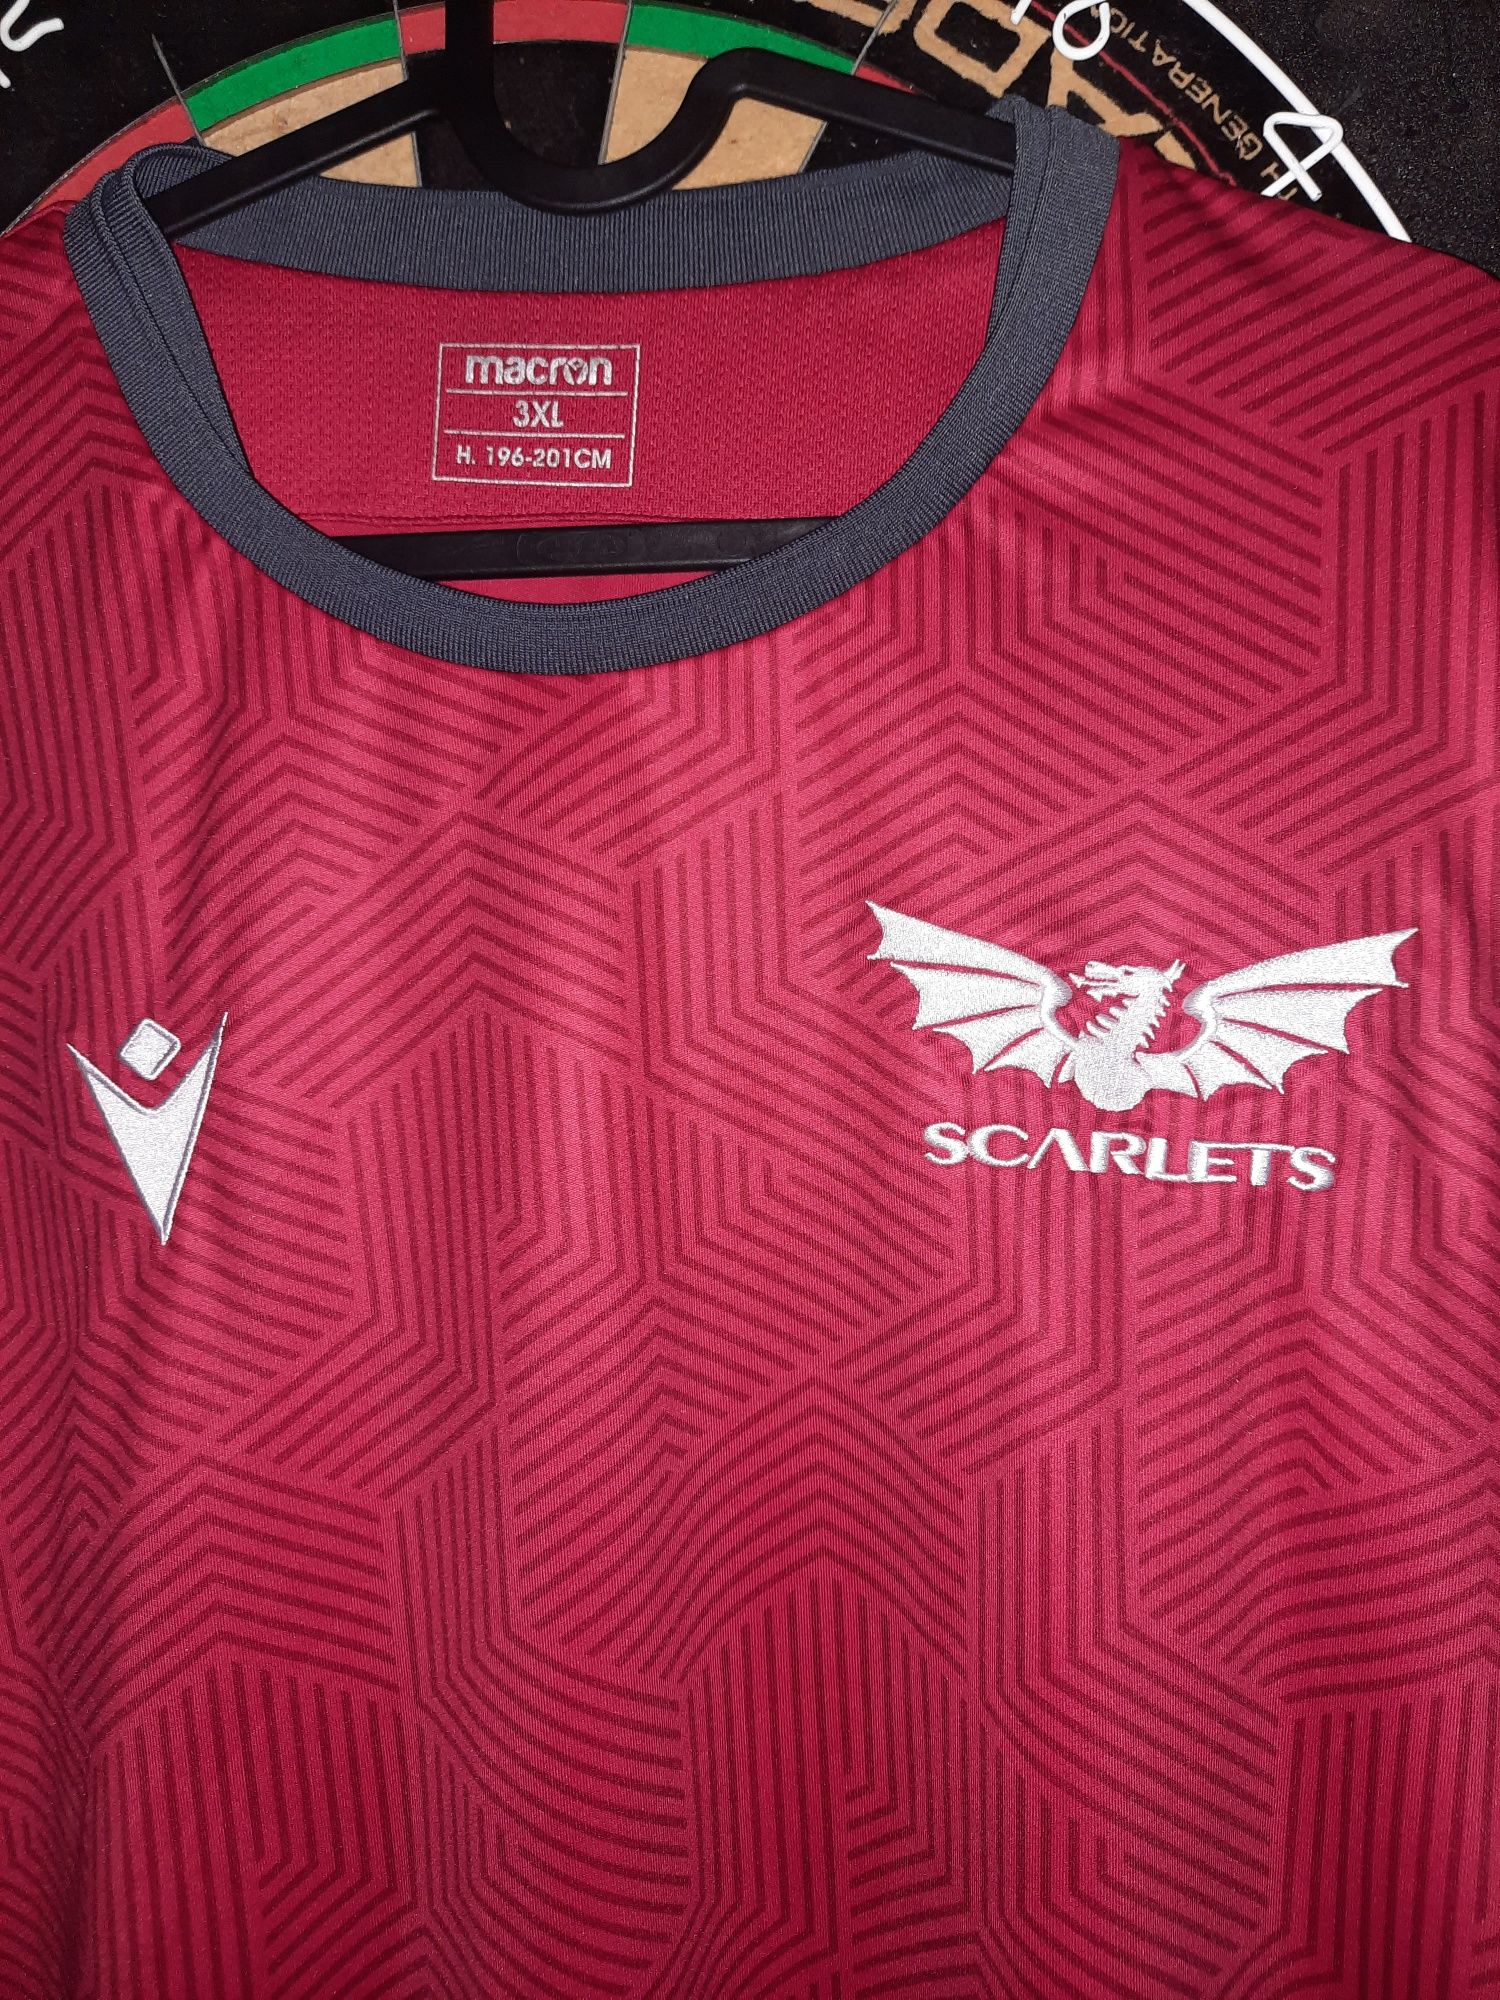 koszulka piłkarska rugby union Scarlets, Walia, Macron 3XL